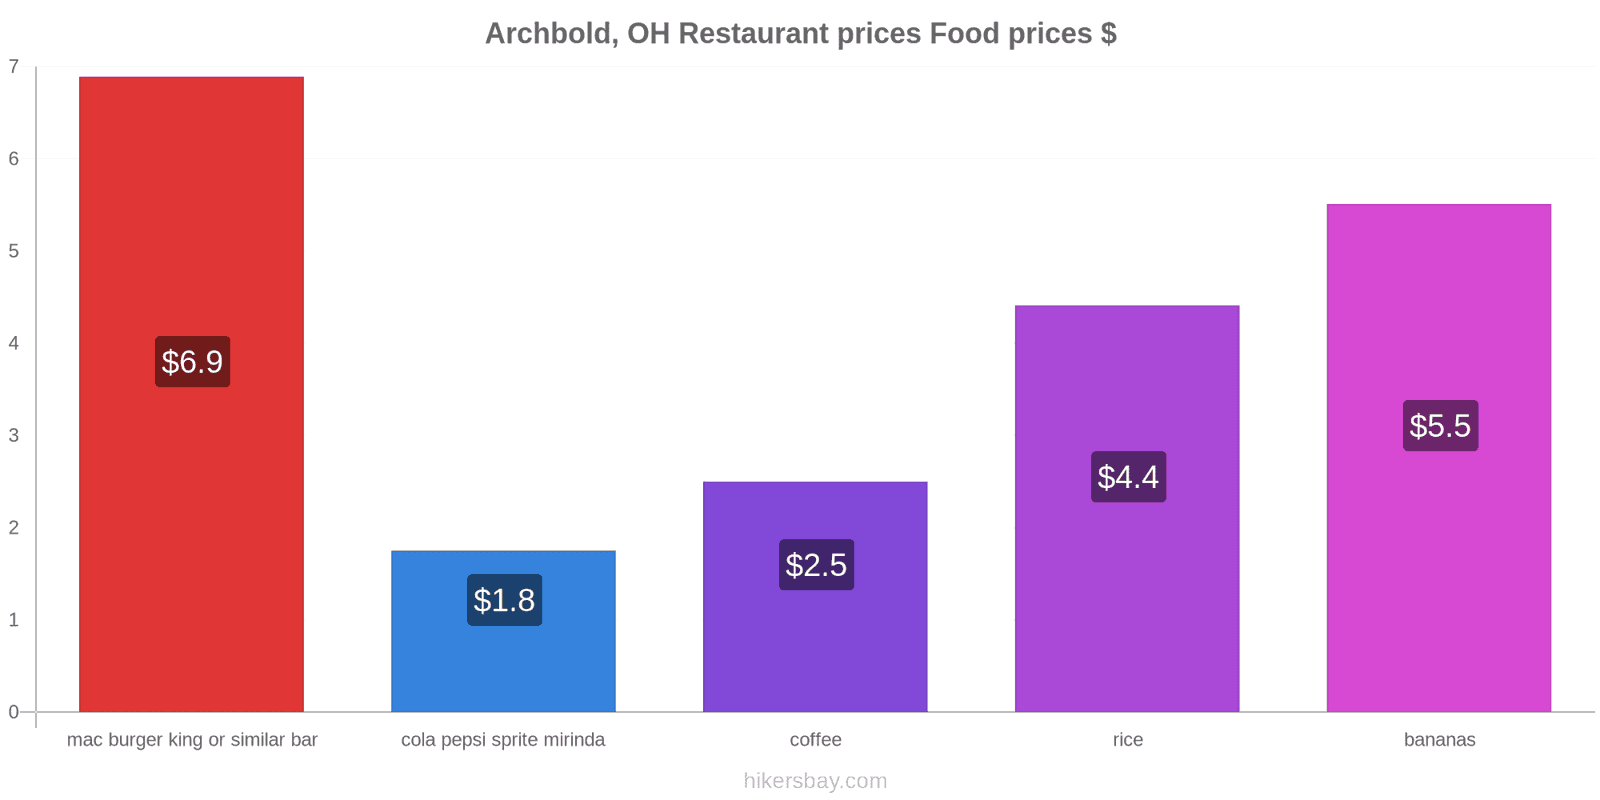 Archbold, OH price changes hikersbay.com